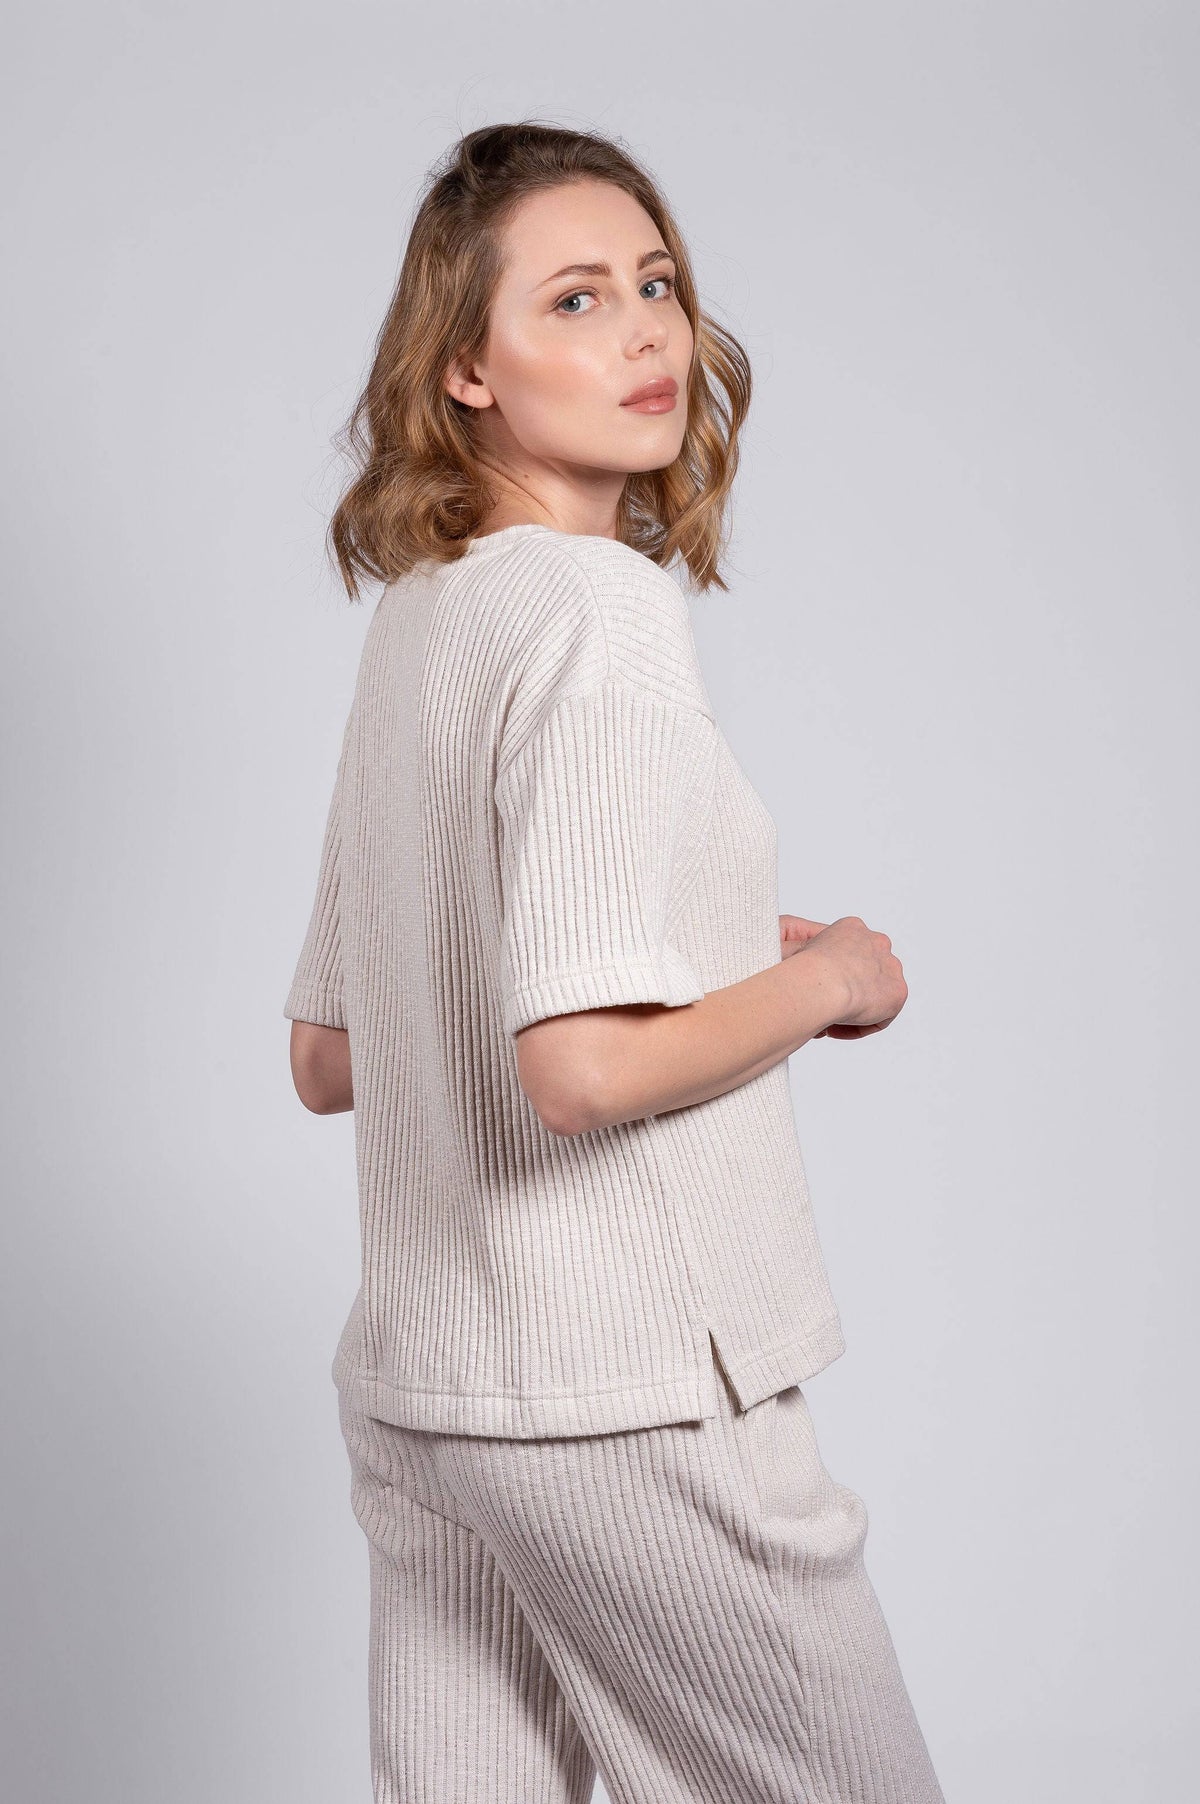 Sweater Rib Knit Tee - LATTELOVE Co.